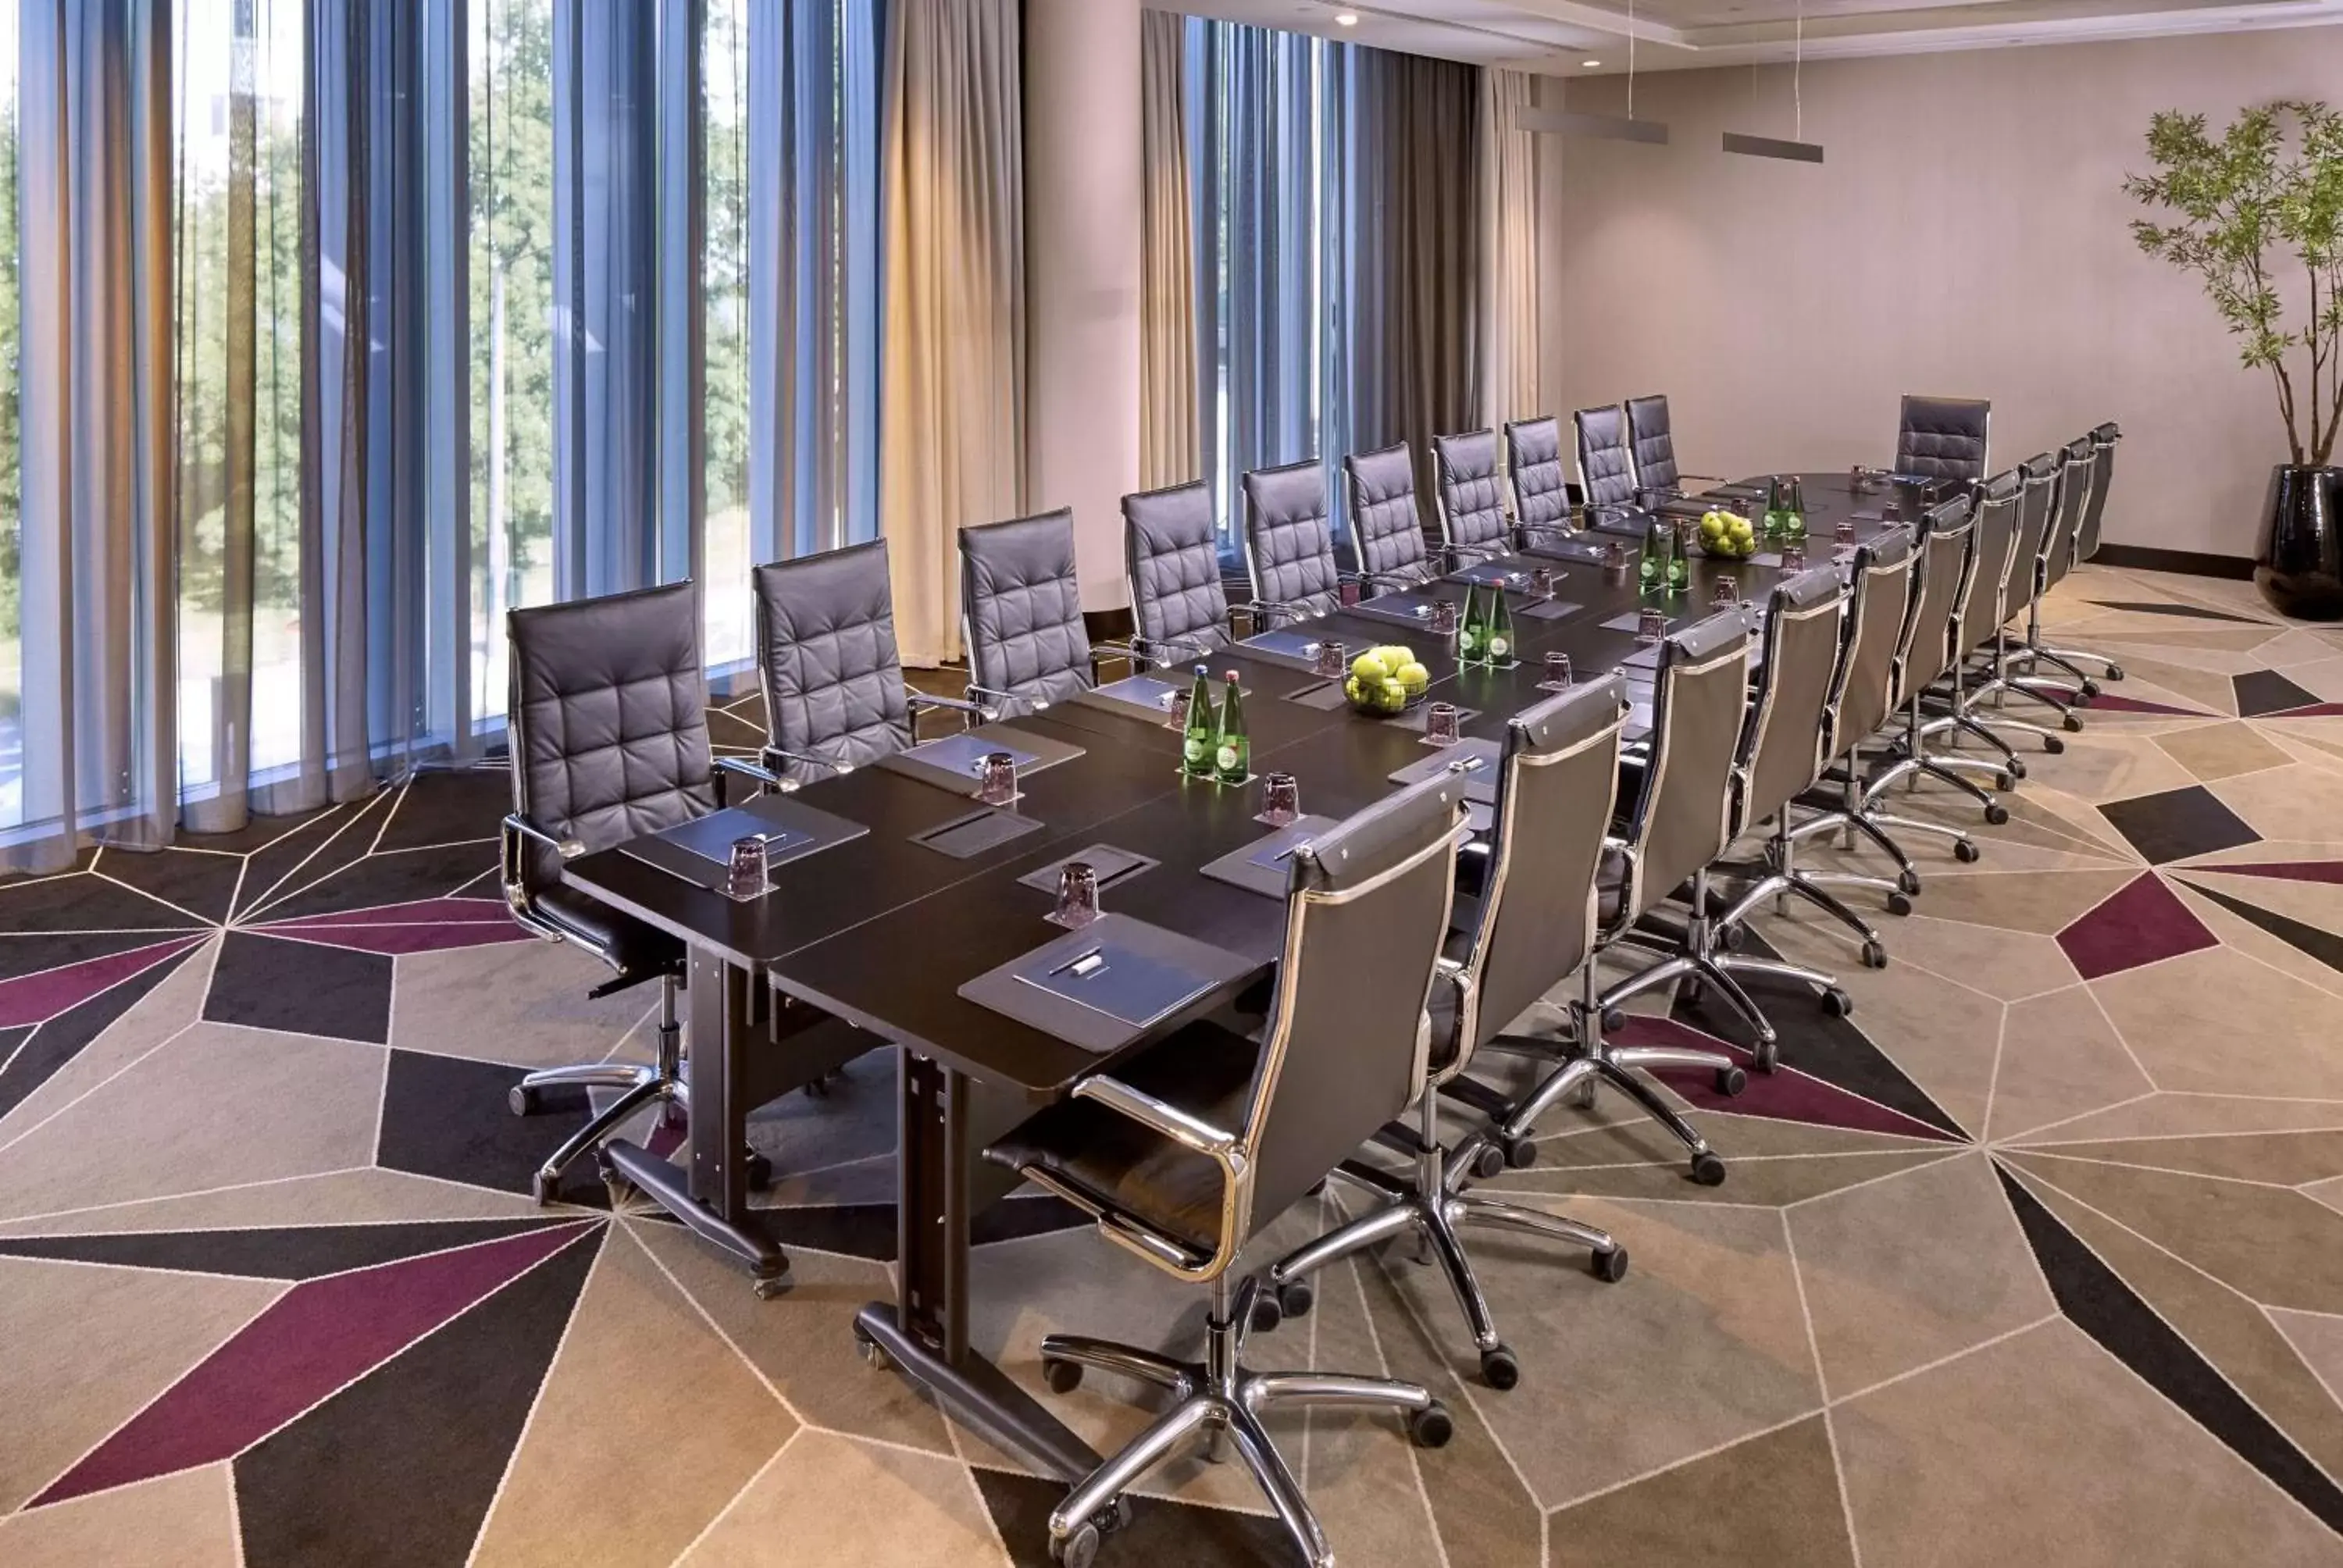 Meeting/conference room in Hilton Tallinn Park